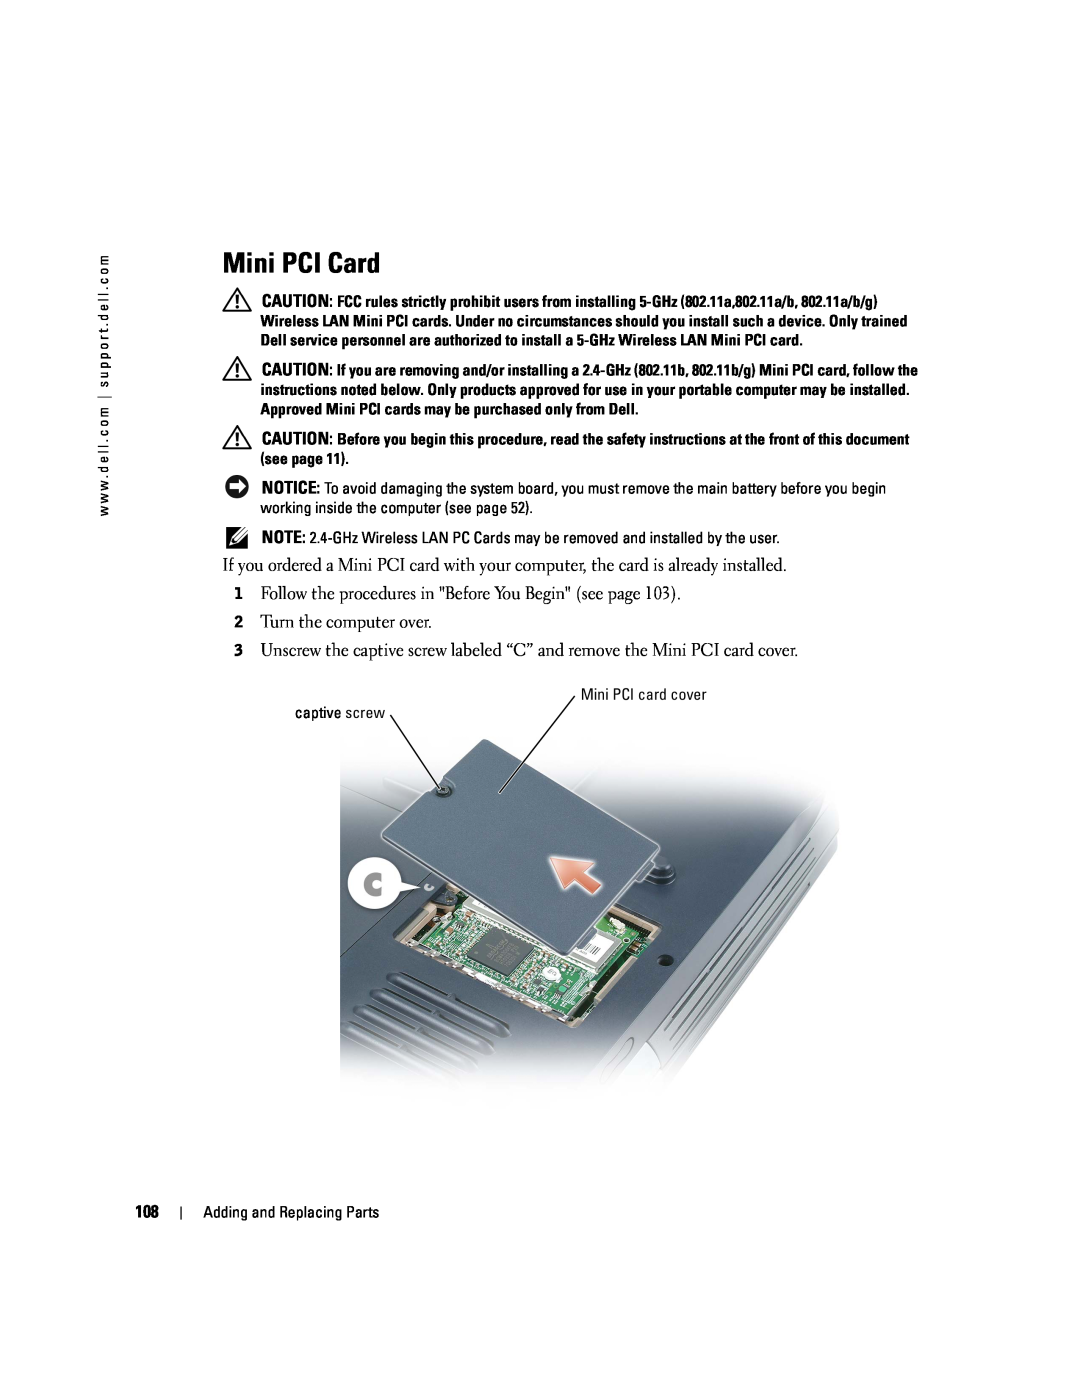 Dell PP09L owner manual Mini PCI Card 